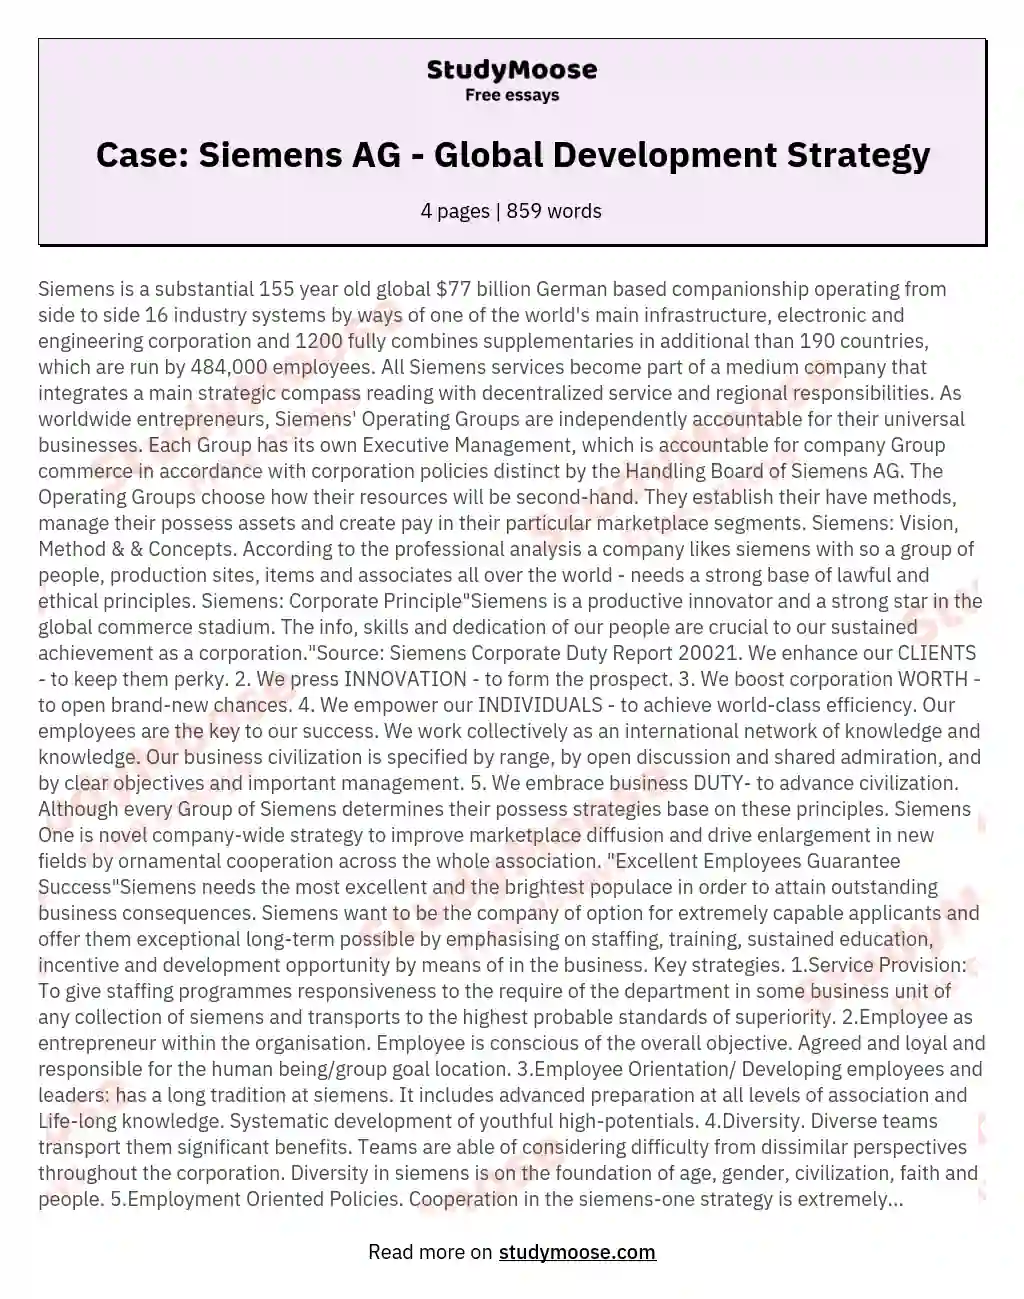 Case: Siemens AG - Global Development Strategy essay